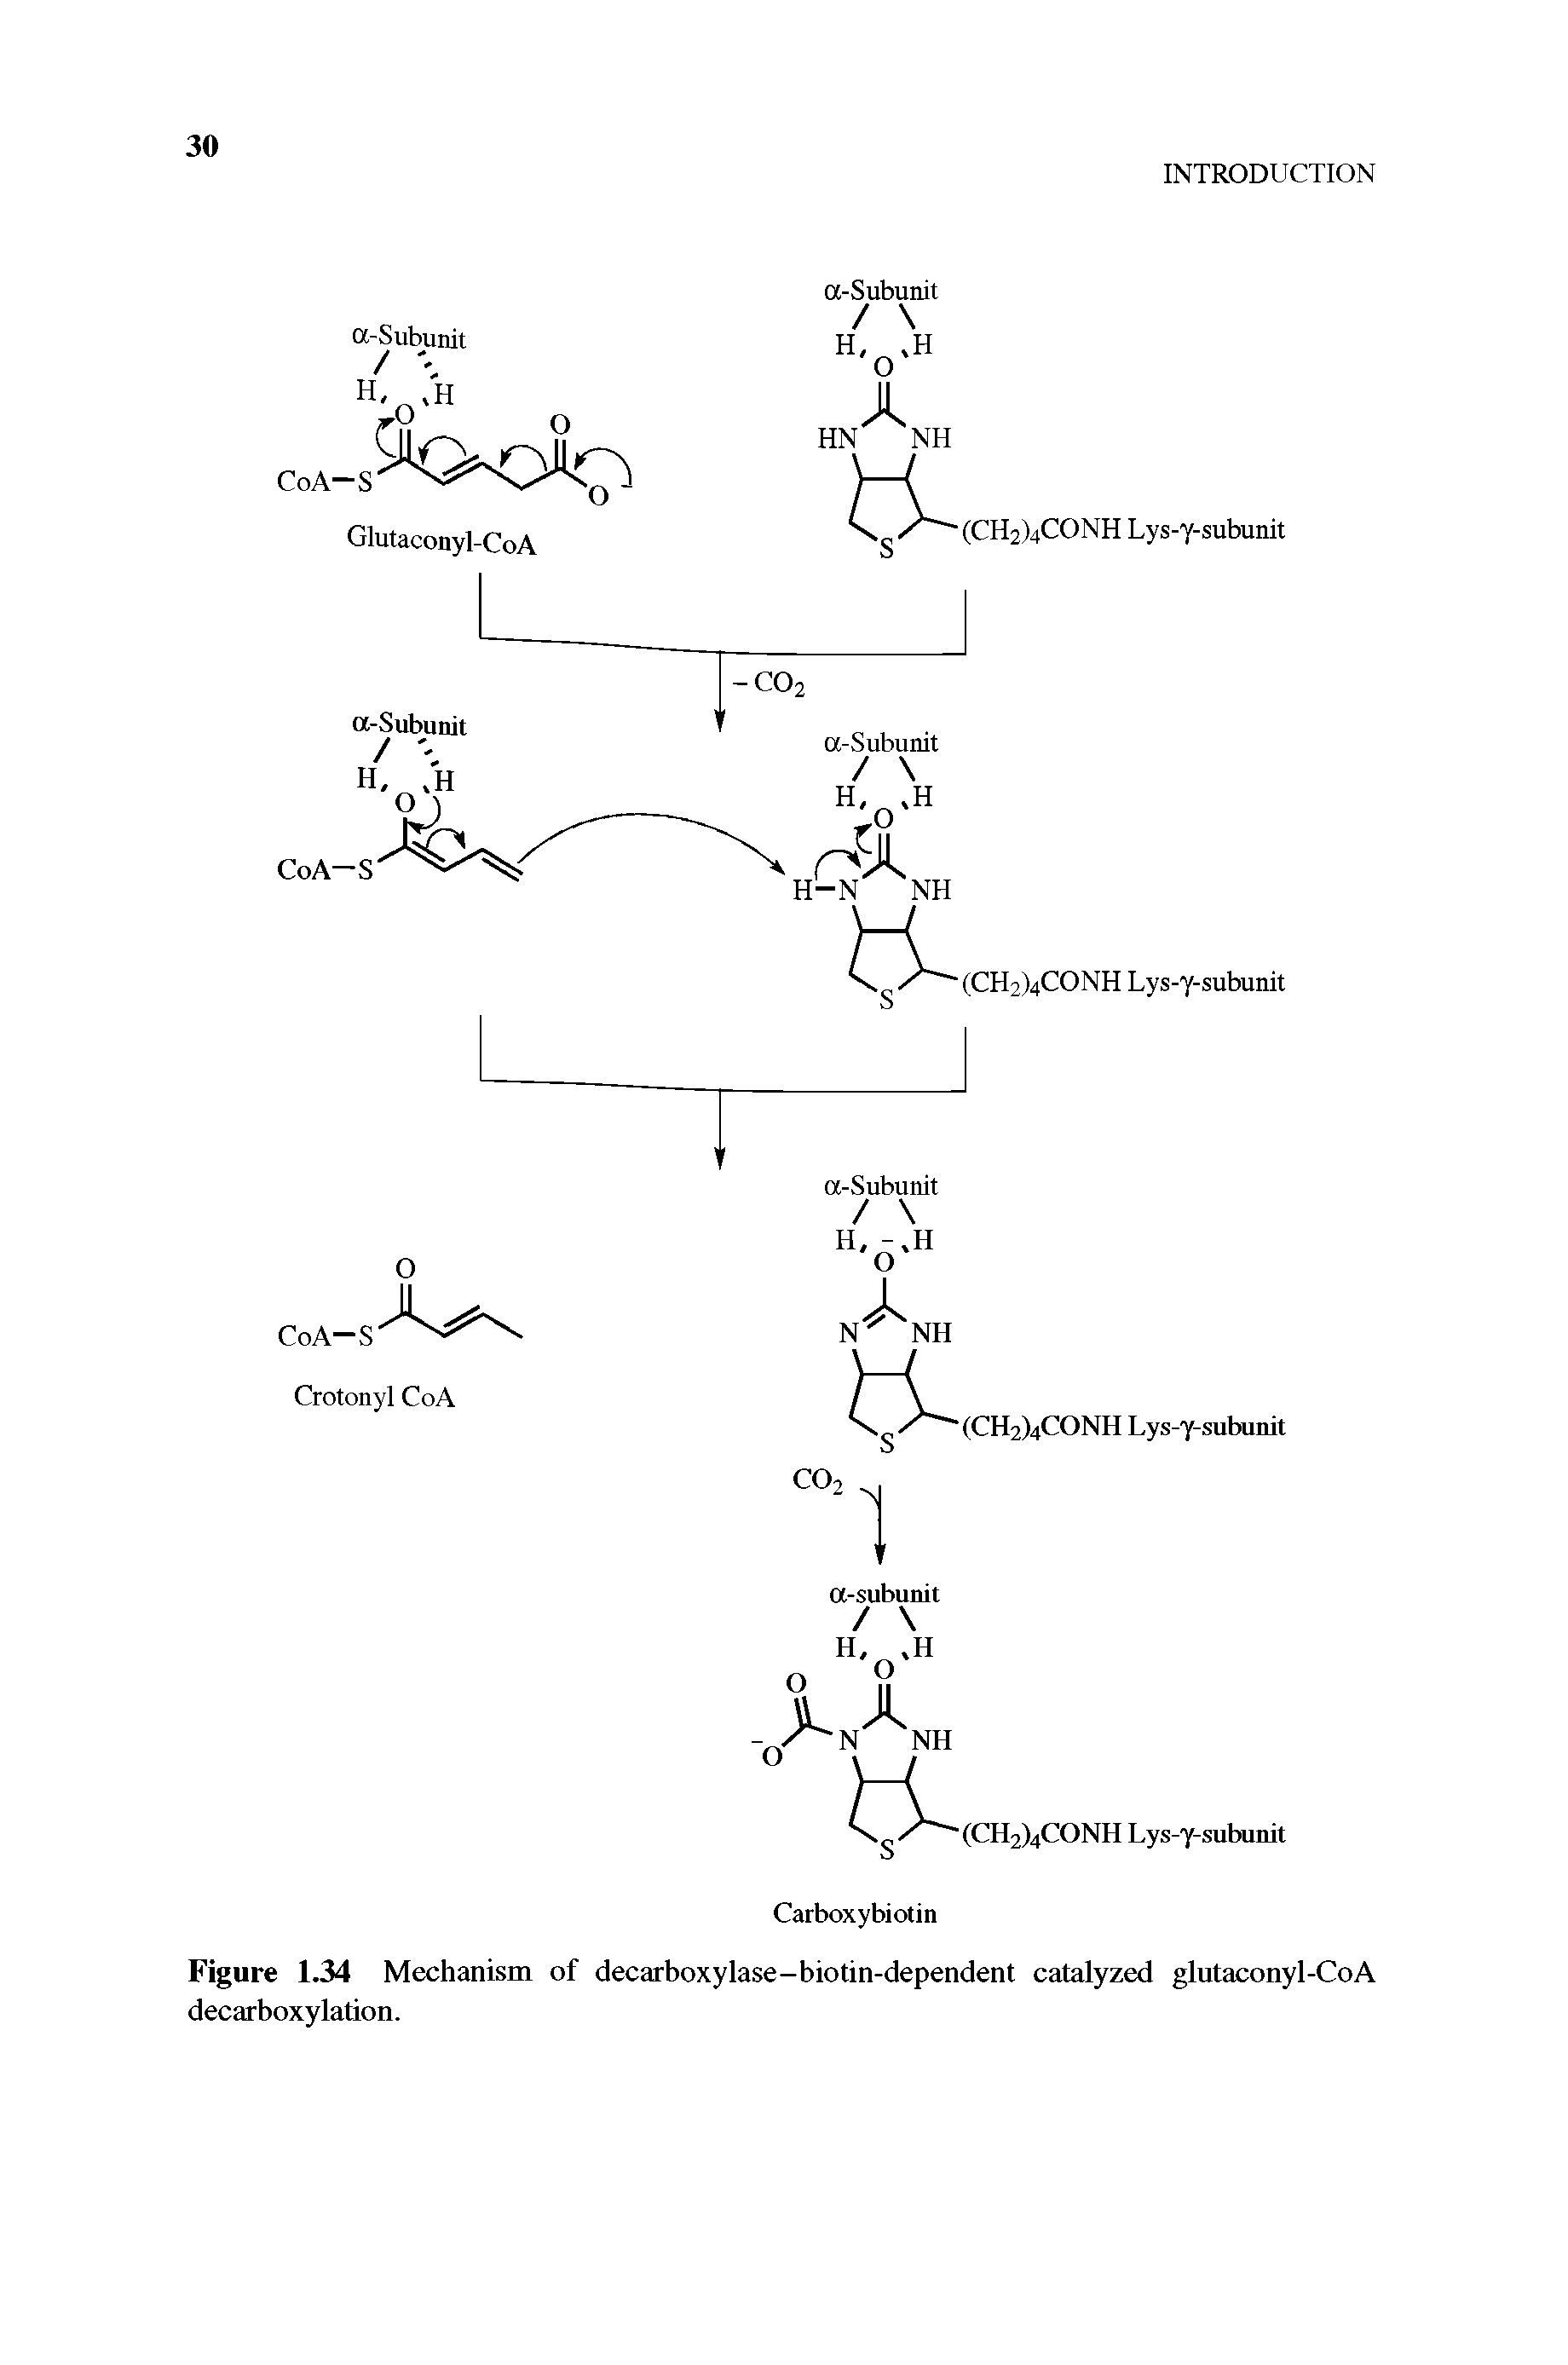 Figure 1.34 Mechanism of decarboxylase-biotin-dependent catalyzed glutaconyl-CoA decarboxylation.